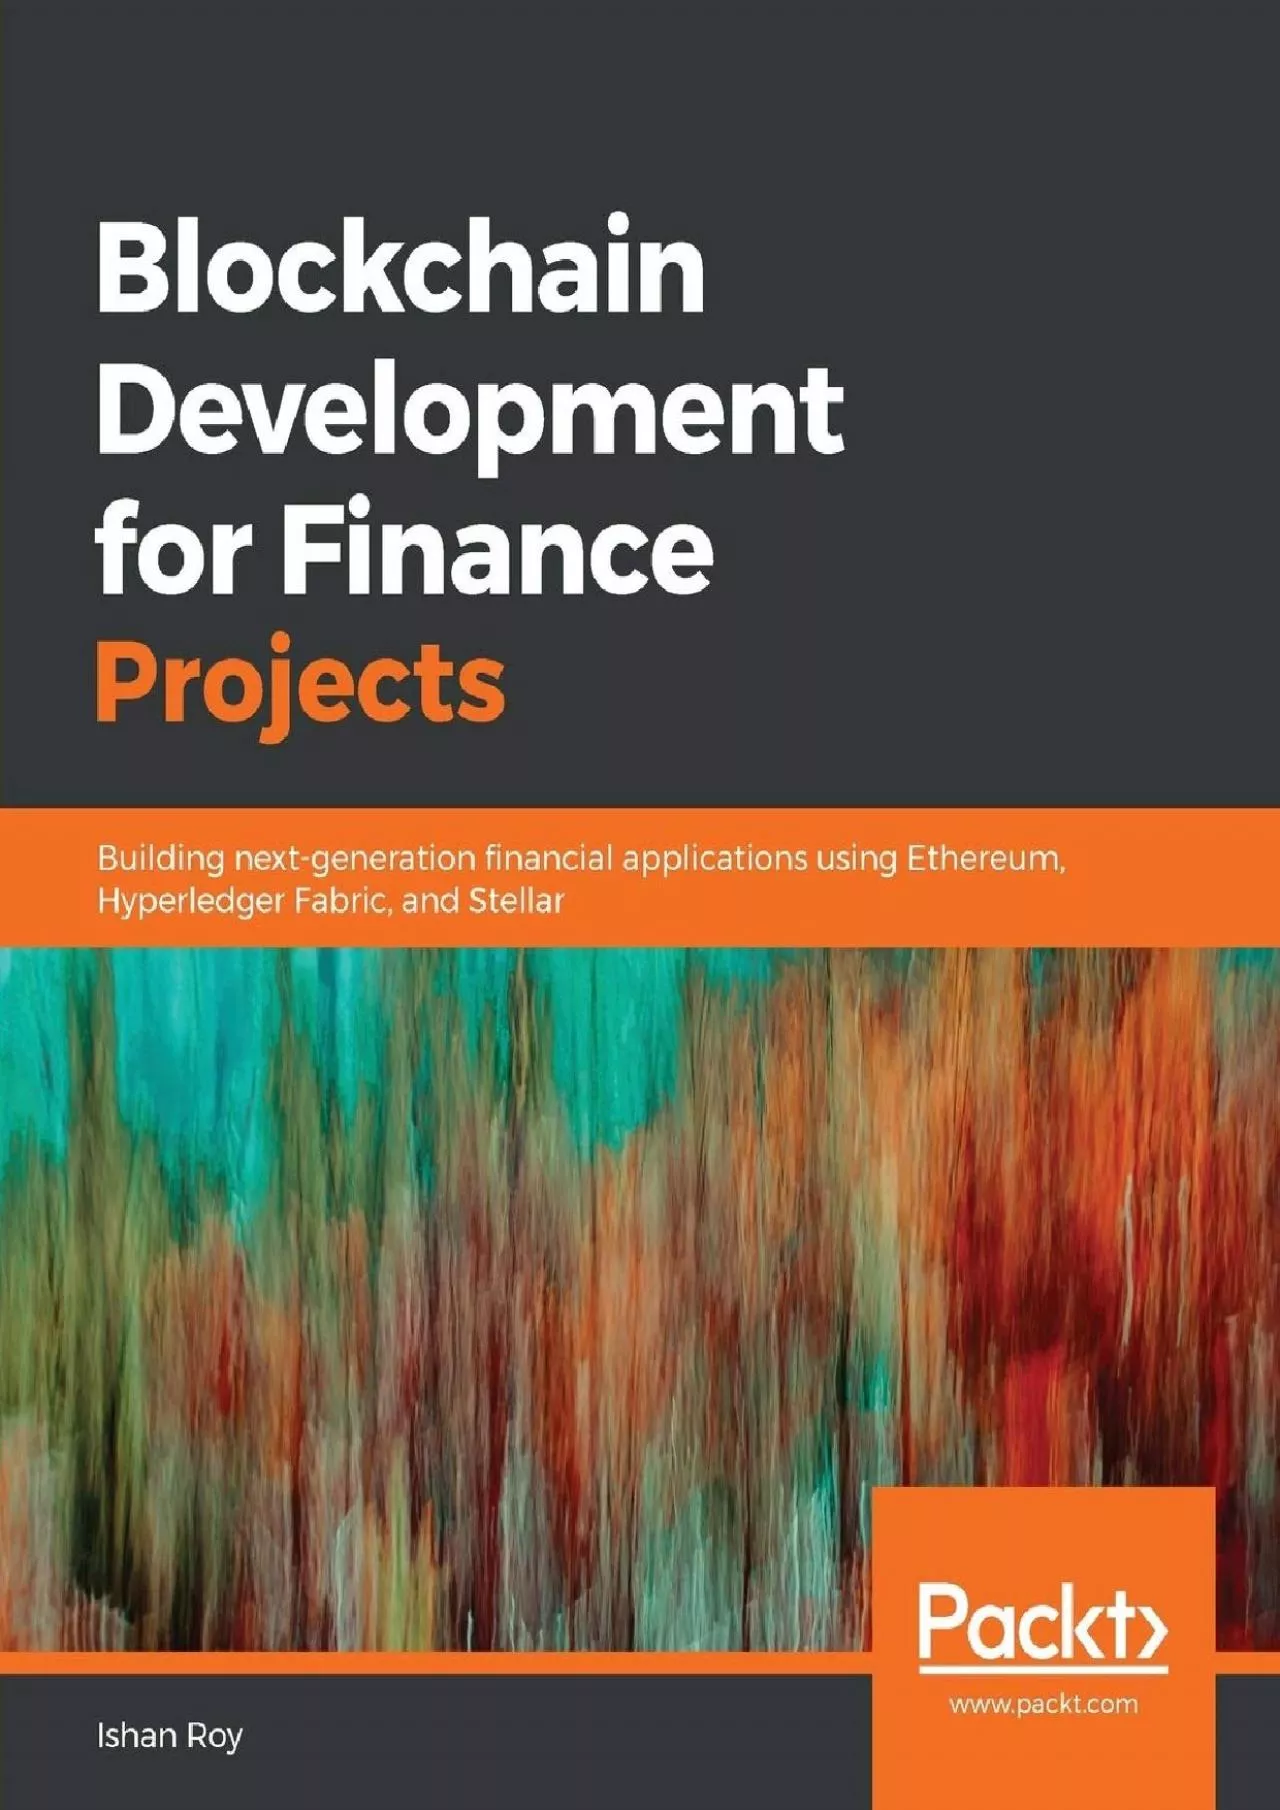 (EBOOK)-Blockchain Development for Finance Projects: Building next-generation financial